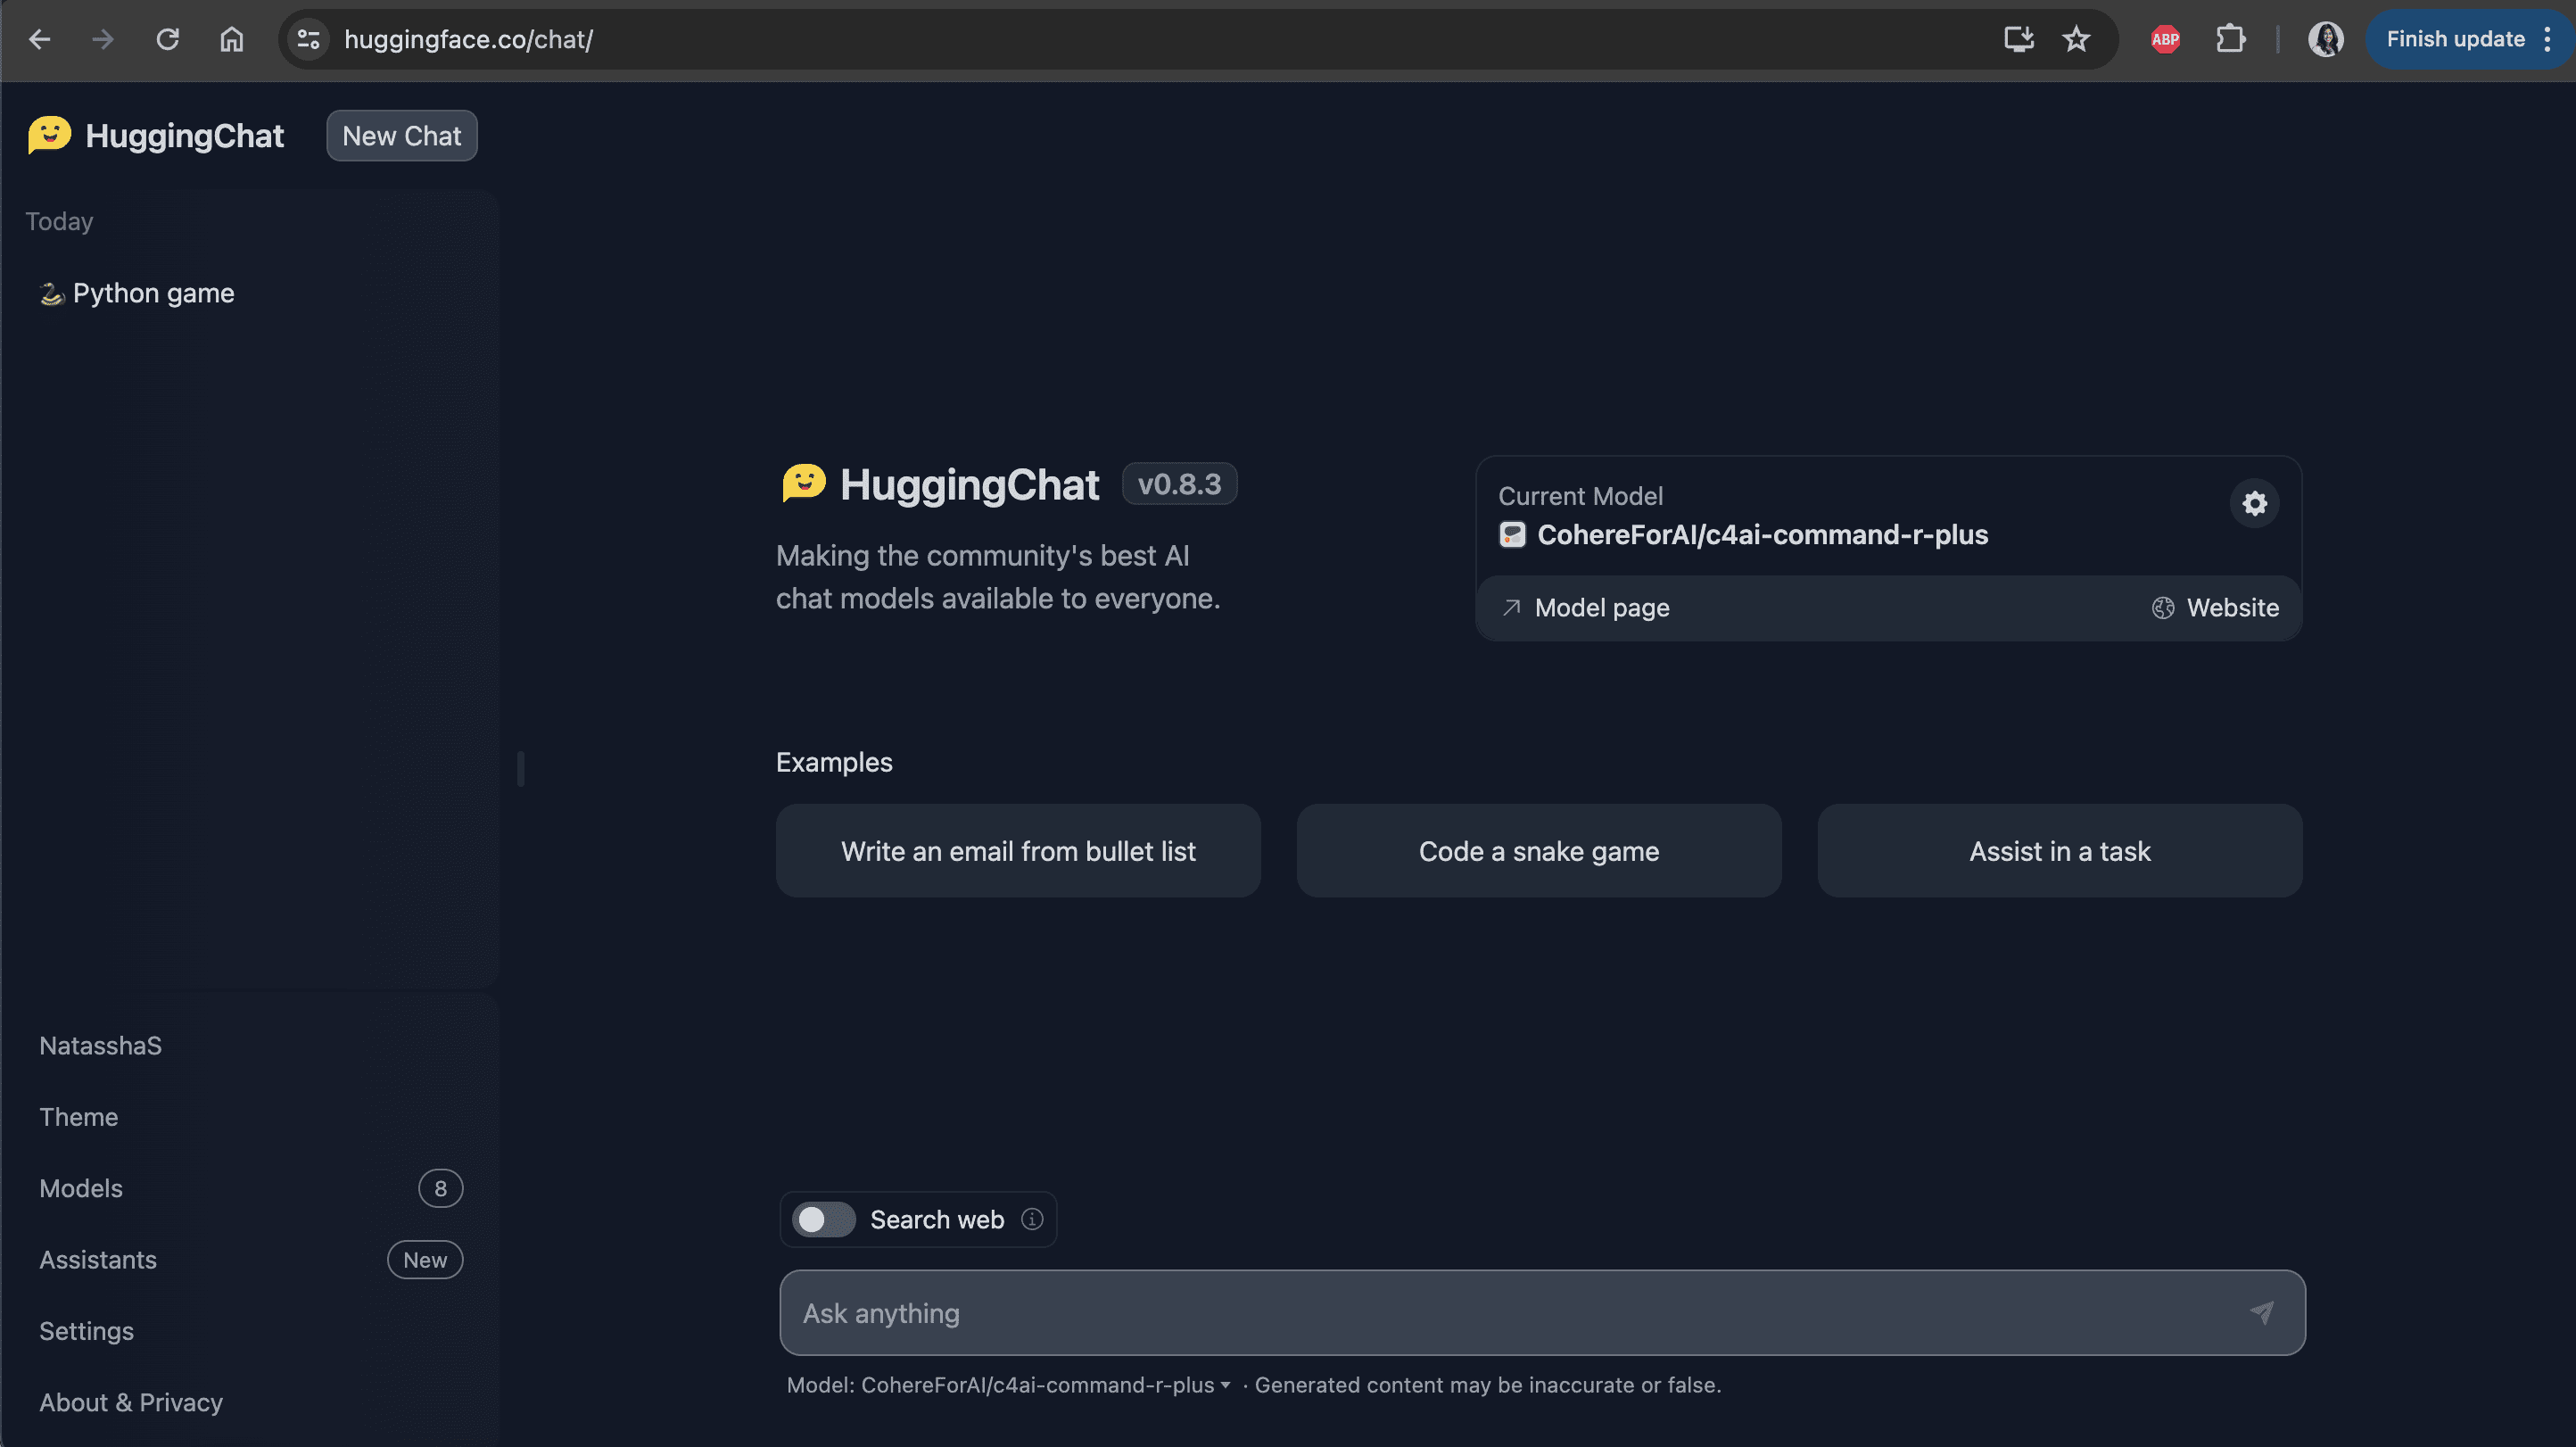 A screenshot of HuggingChat's interface